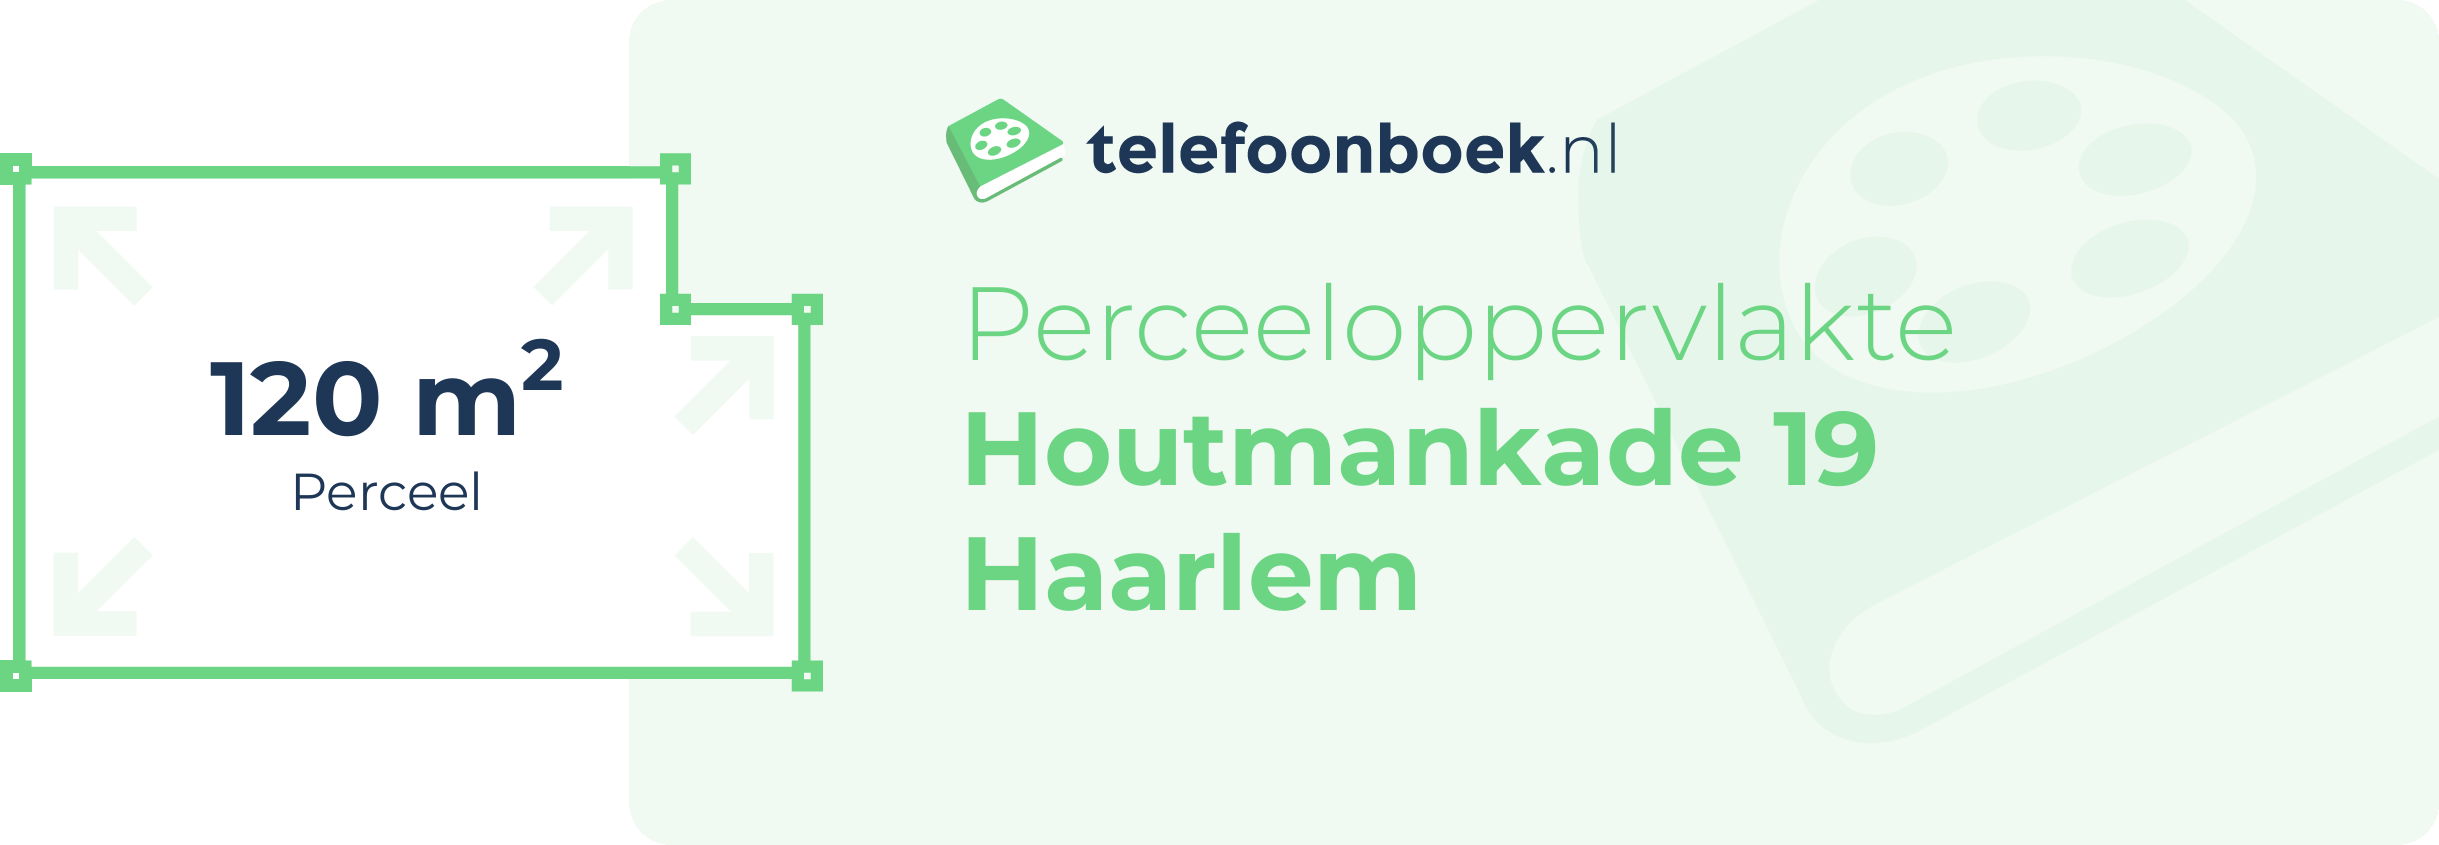 Perceeloppervlakte Houtmankade 19 Haarlem